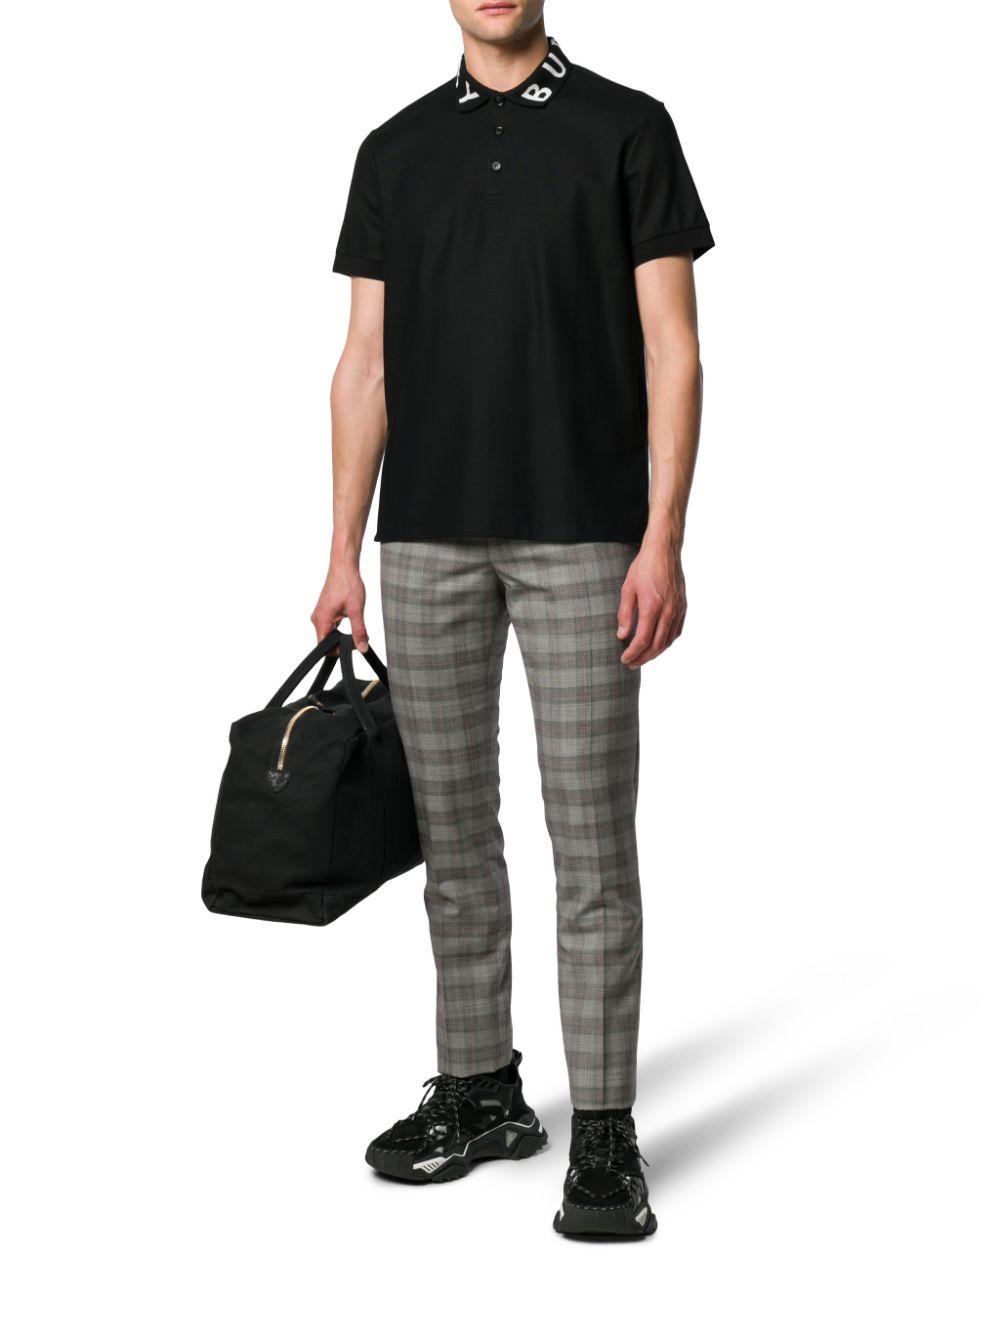 Burberry Cotton Logo Collar Polo Shirt in Black for Men - Lyst